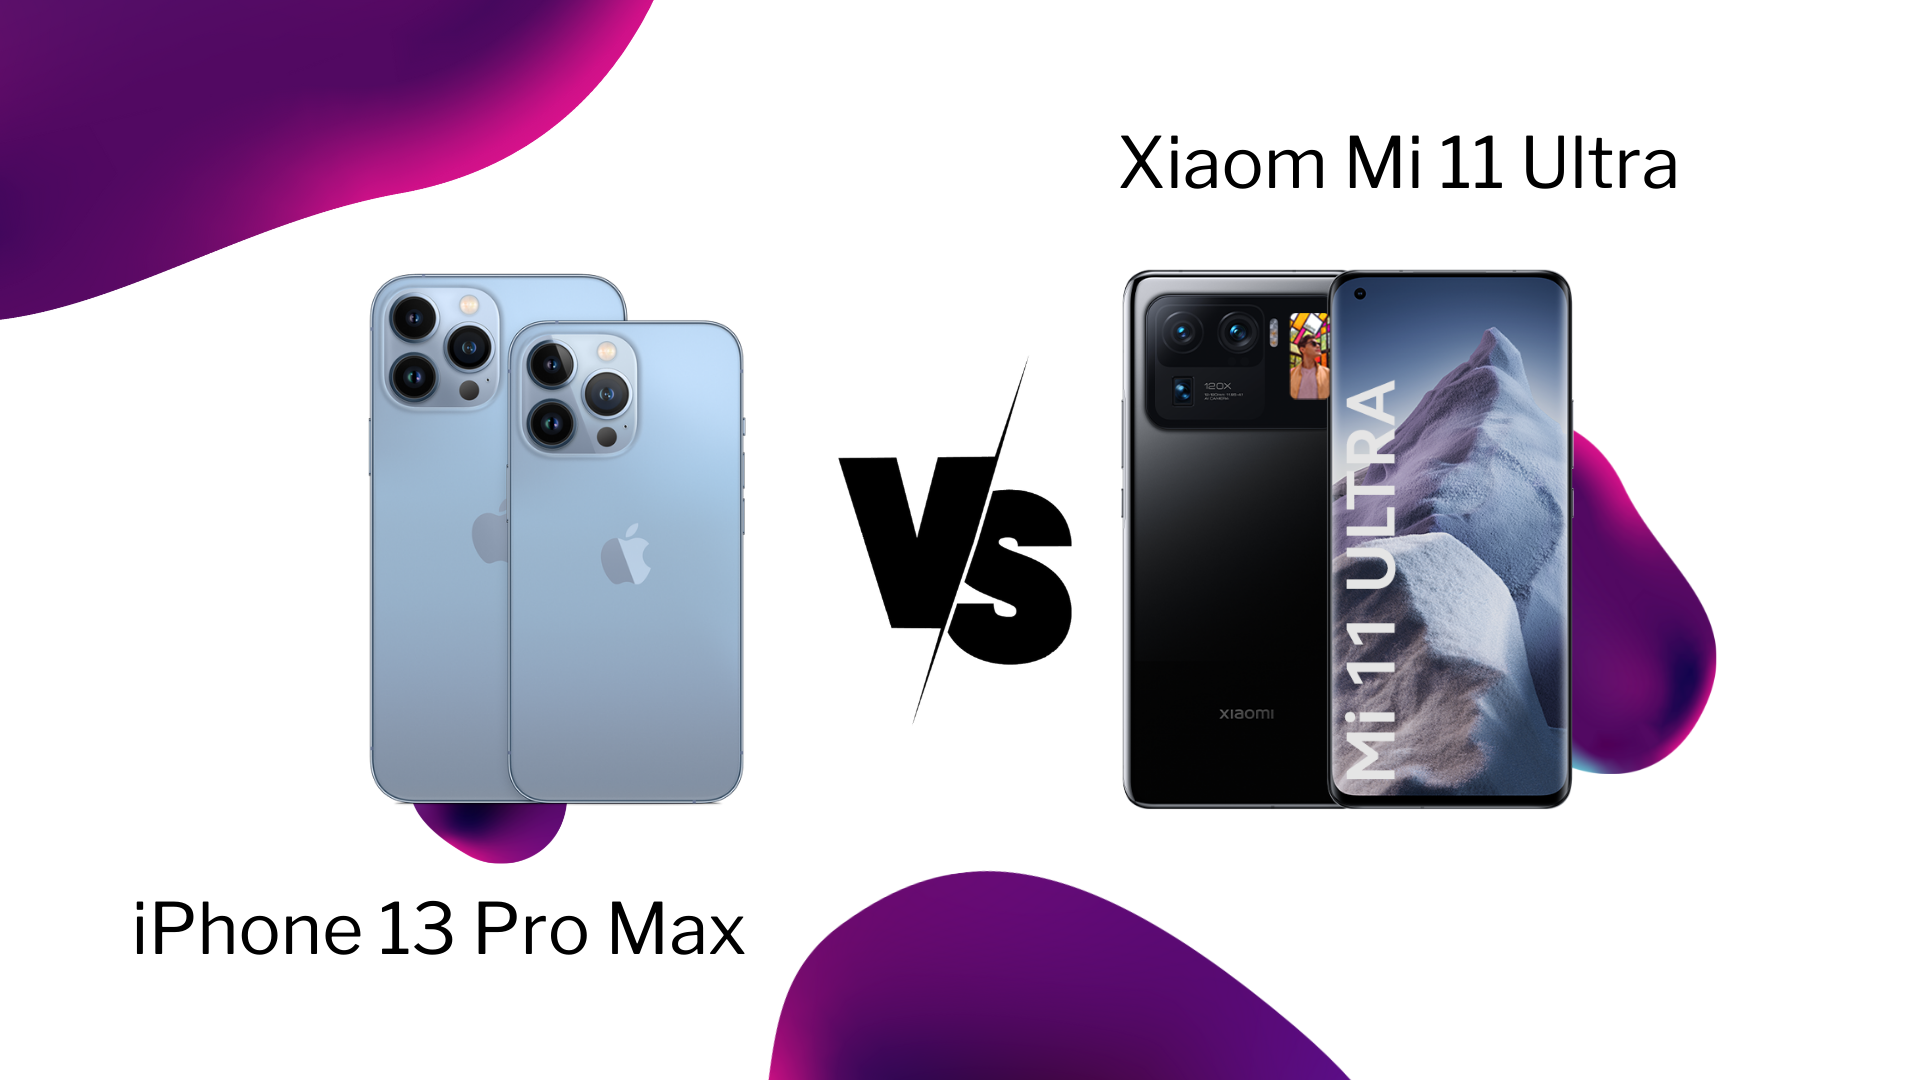 Xiaomi 13 pro vs 14 pro